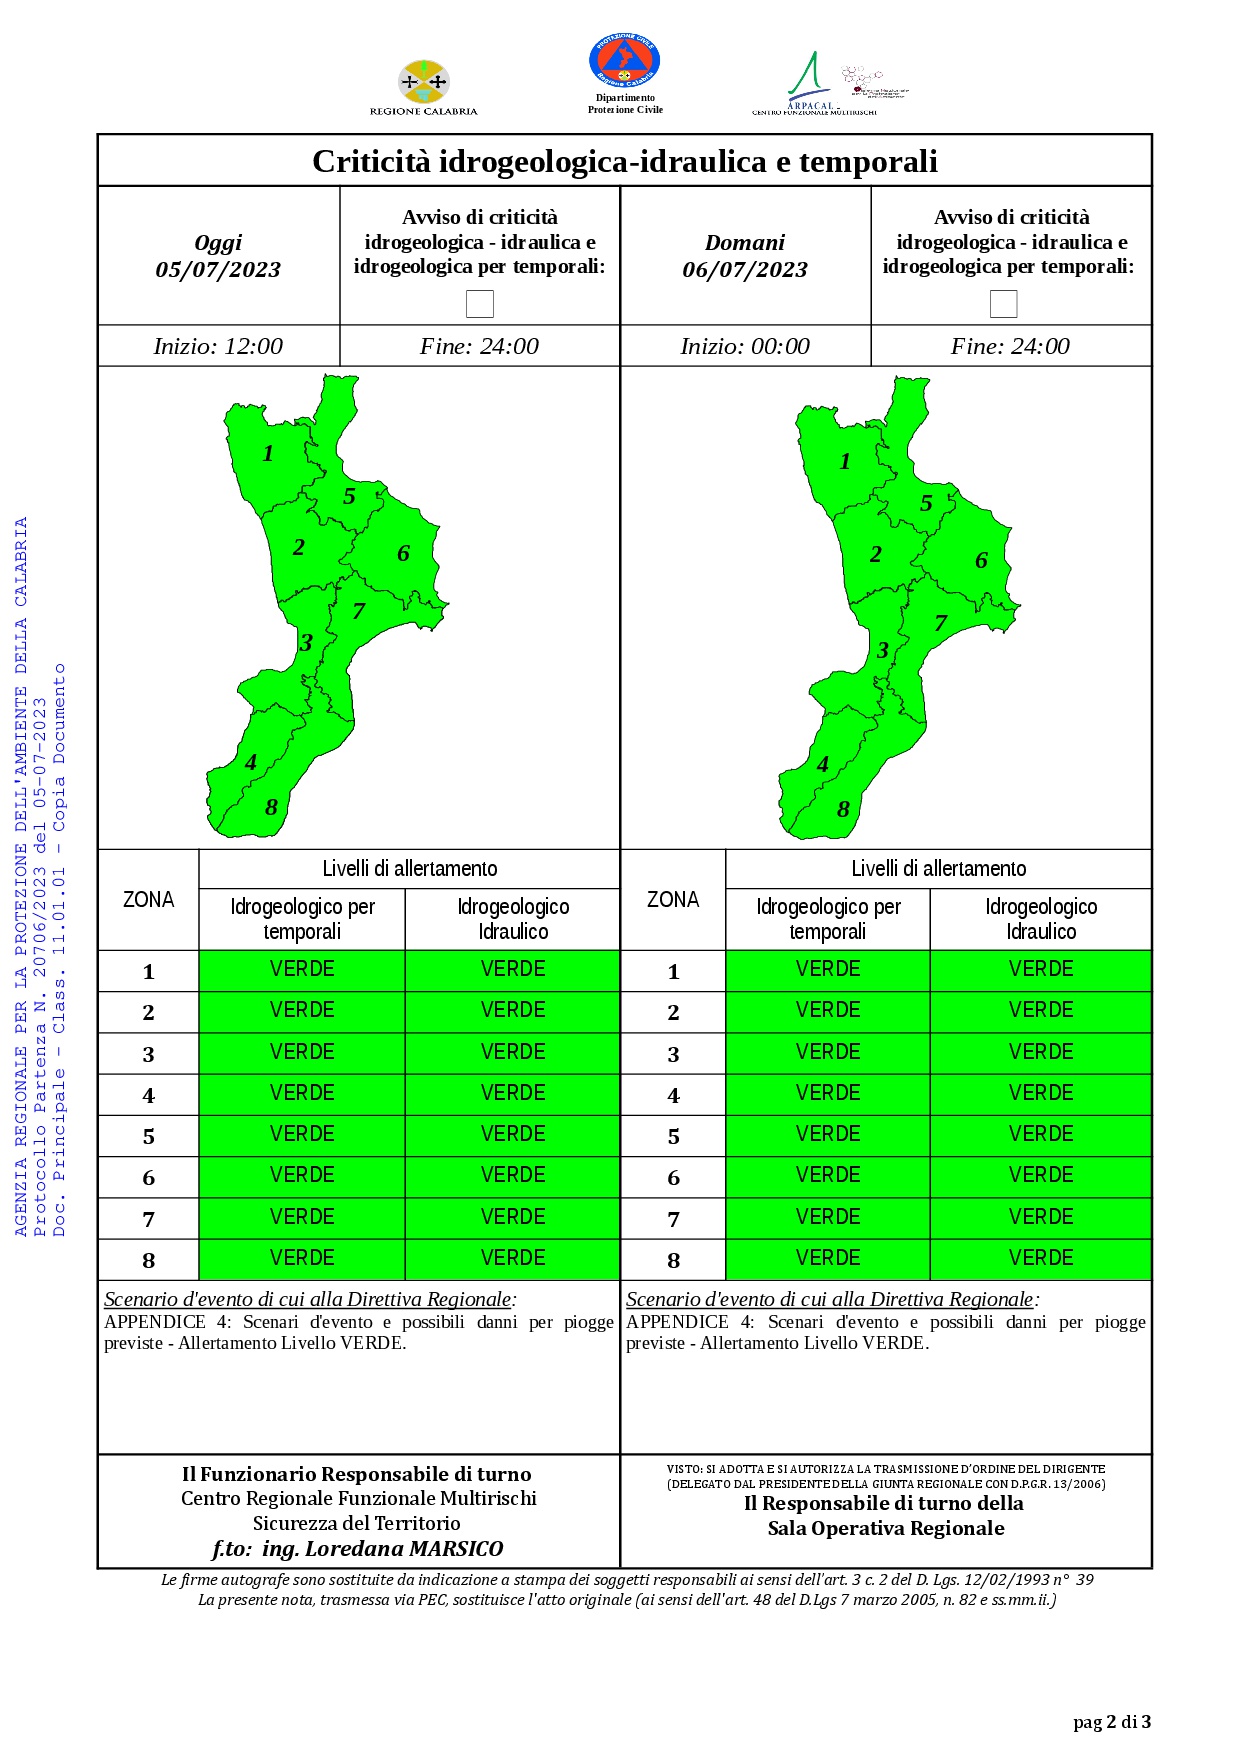 Criticità idrogeologica-idraulica e temporali in Calabria 05-07-2023